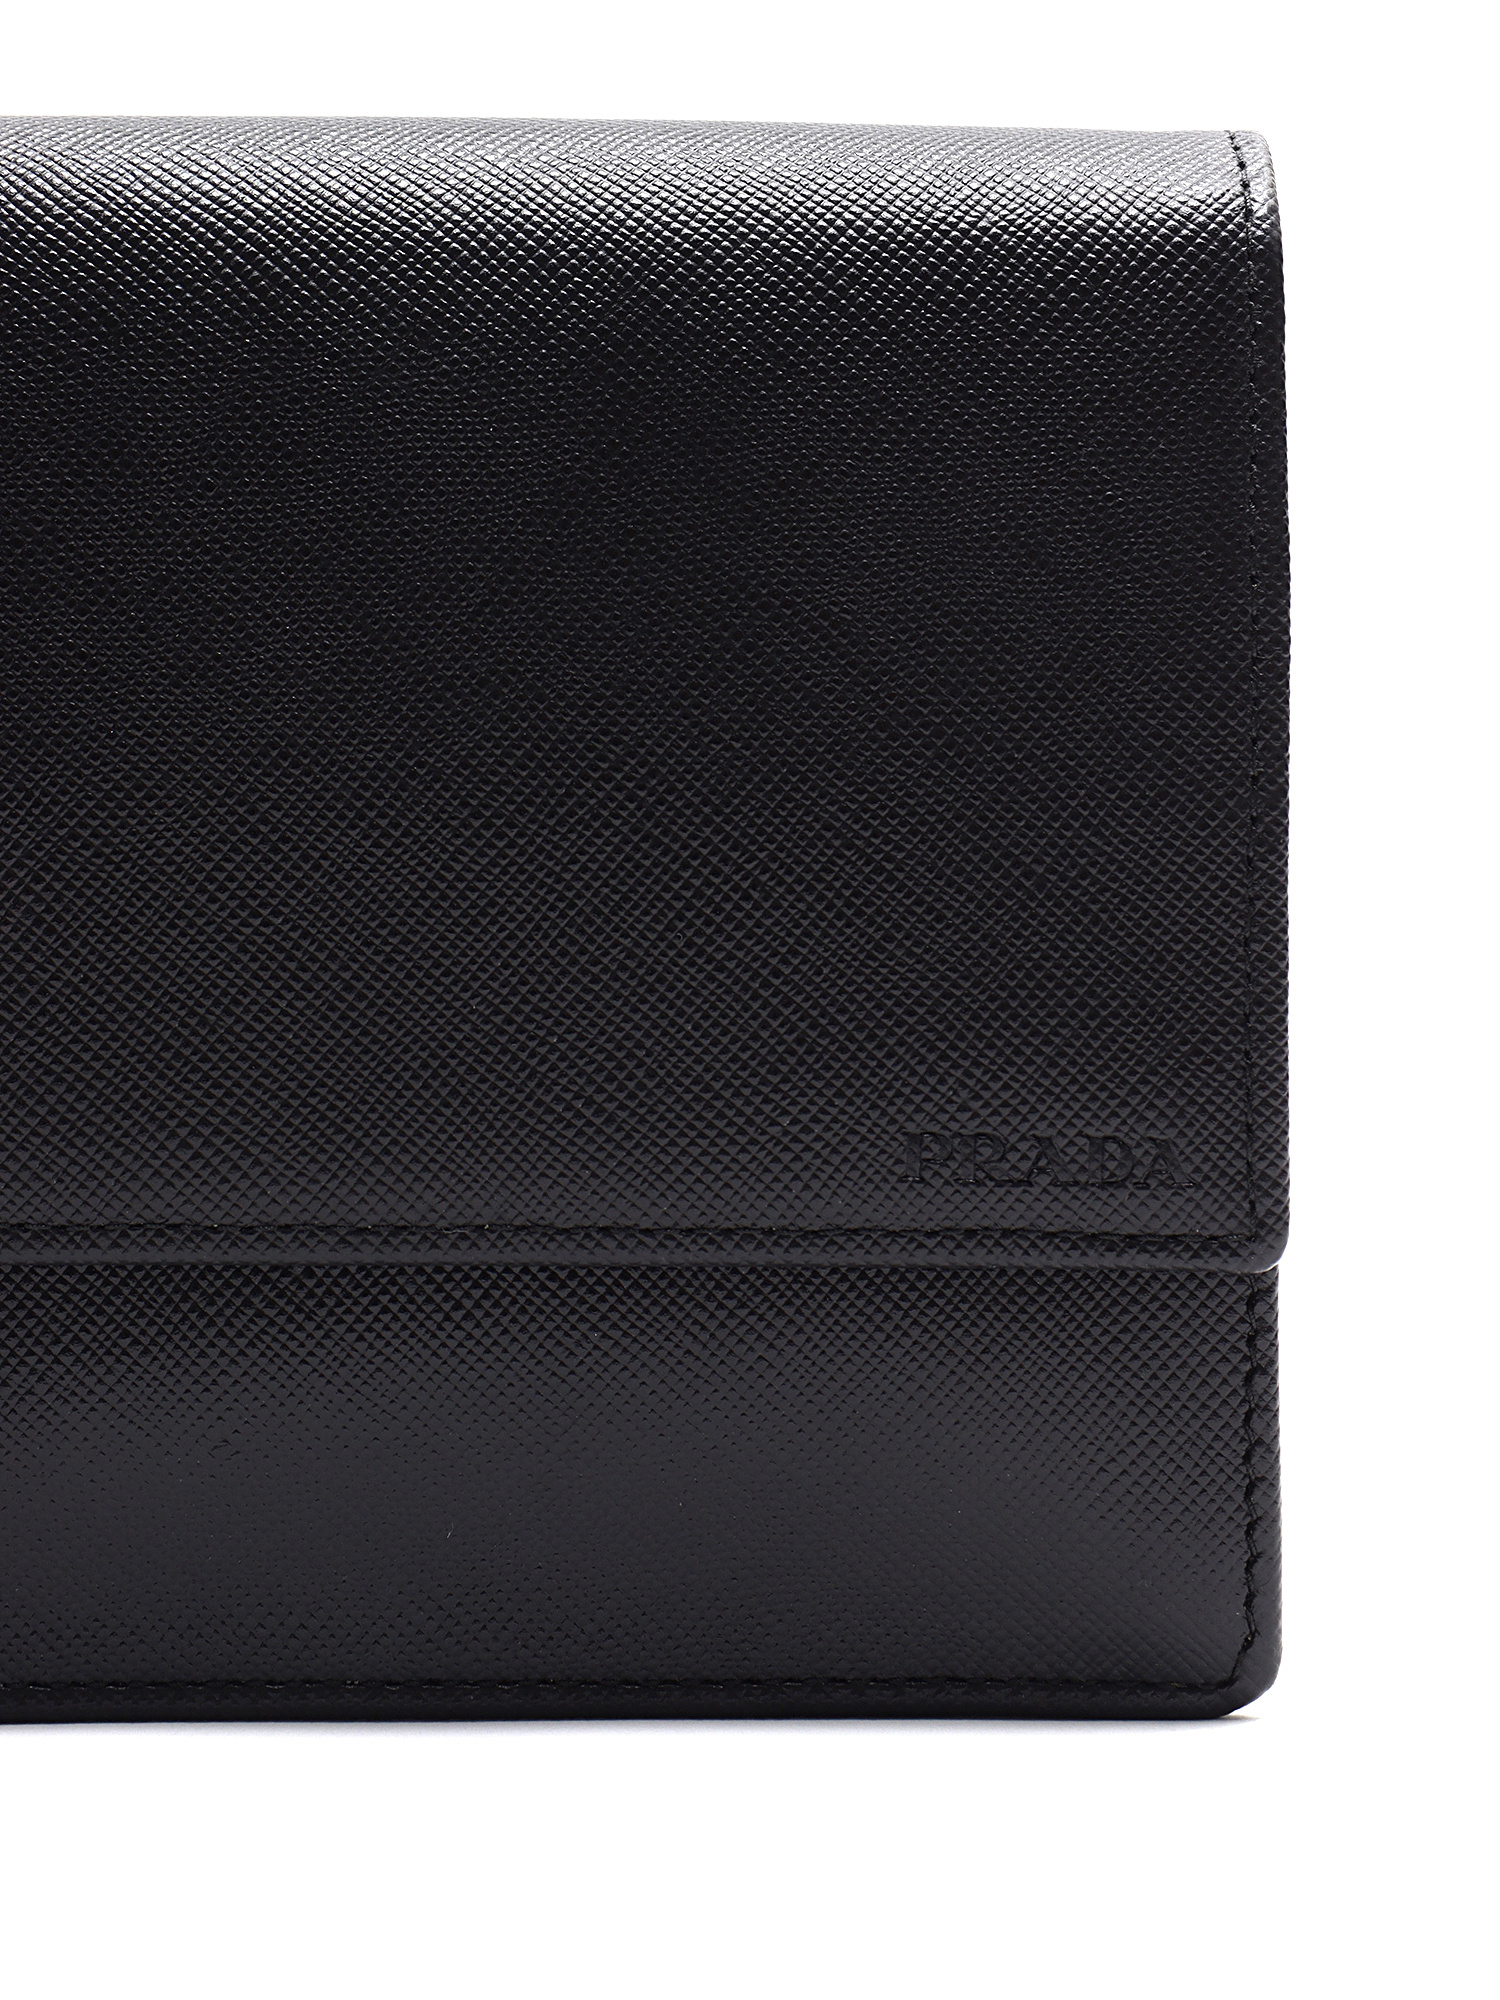 Prada Double Zip Organizer Wallet Saffiano Leather